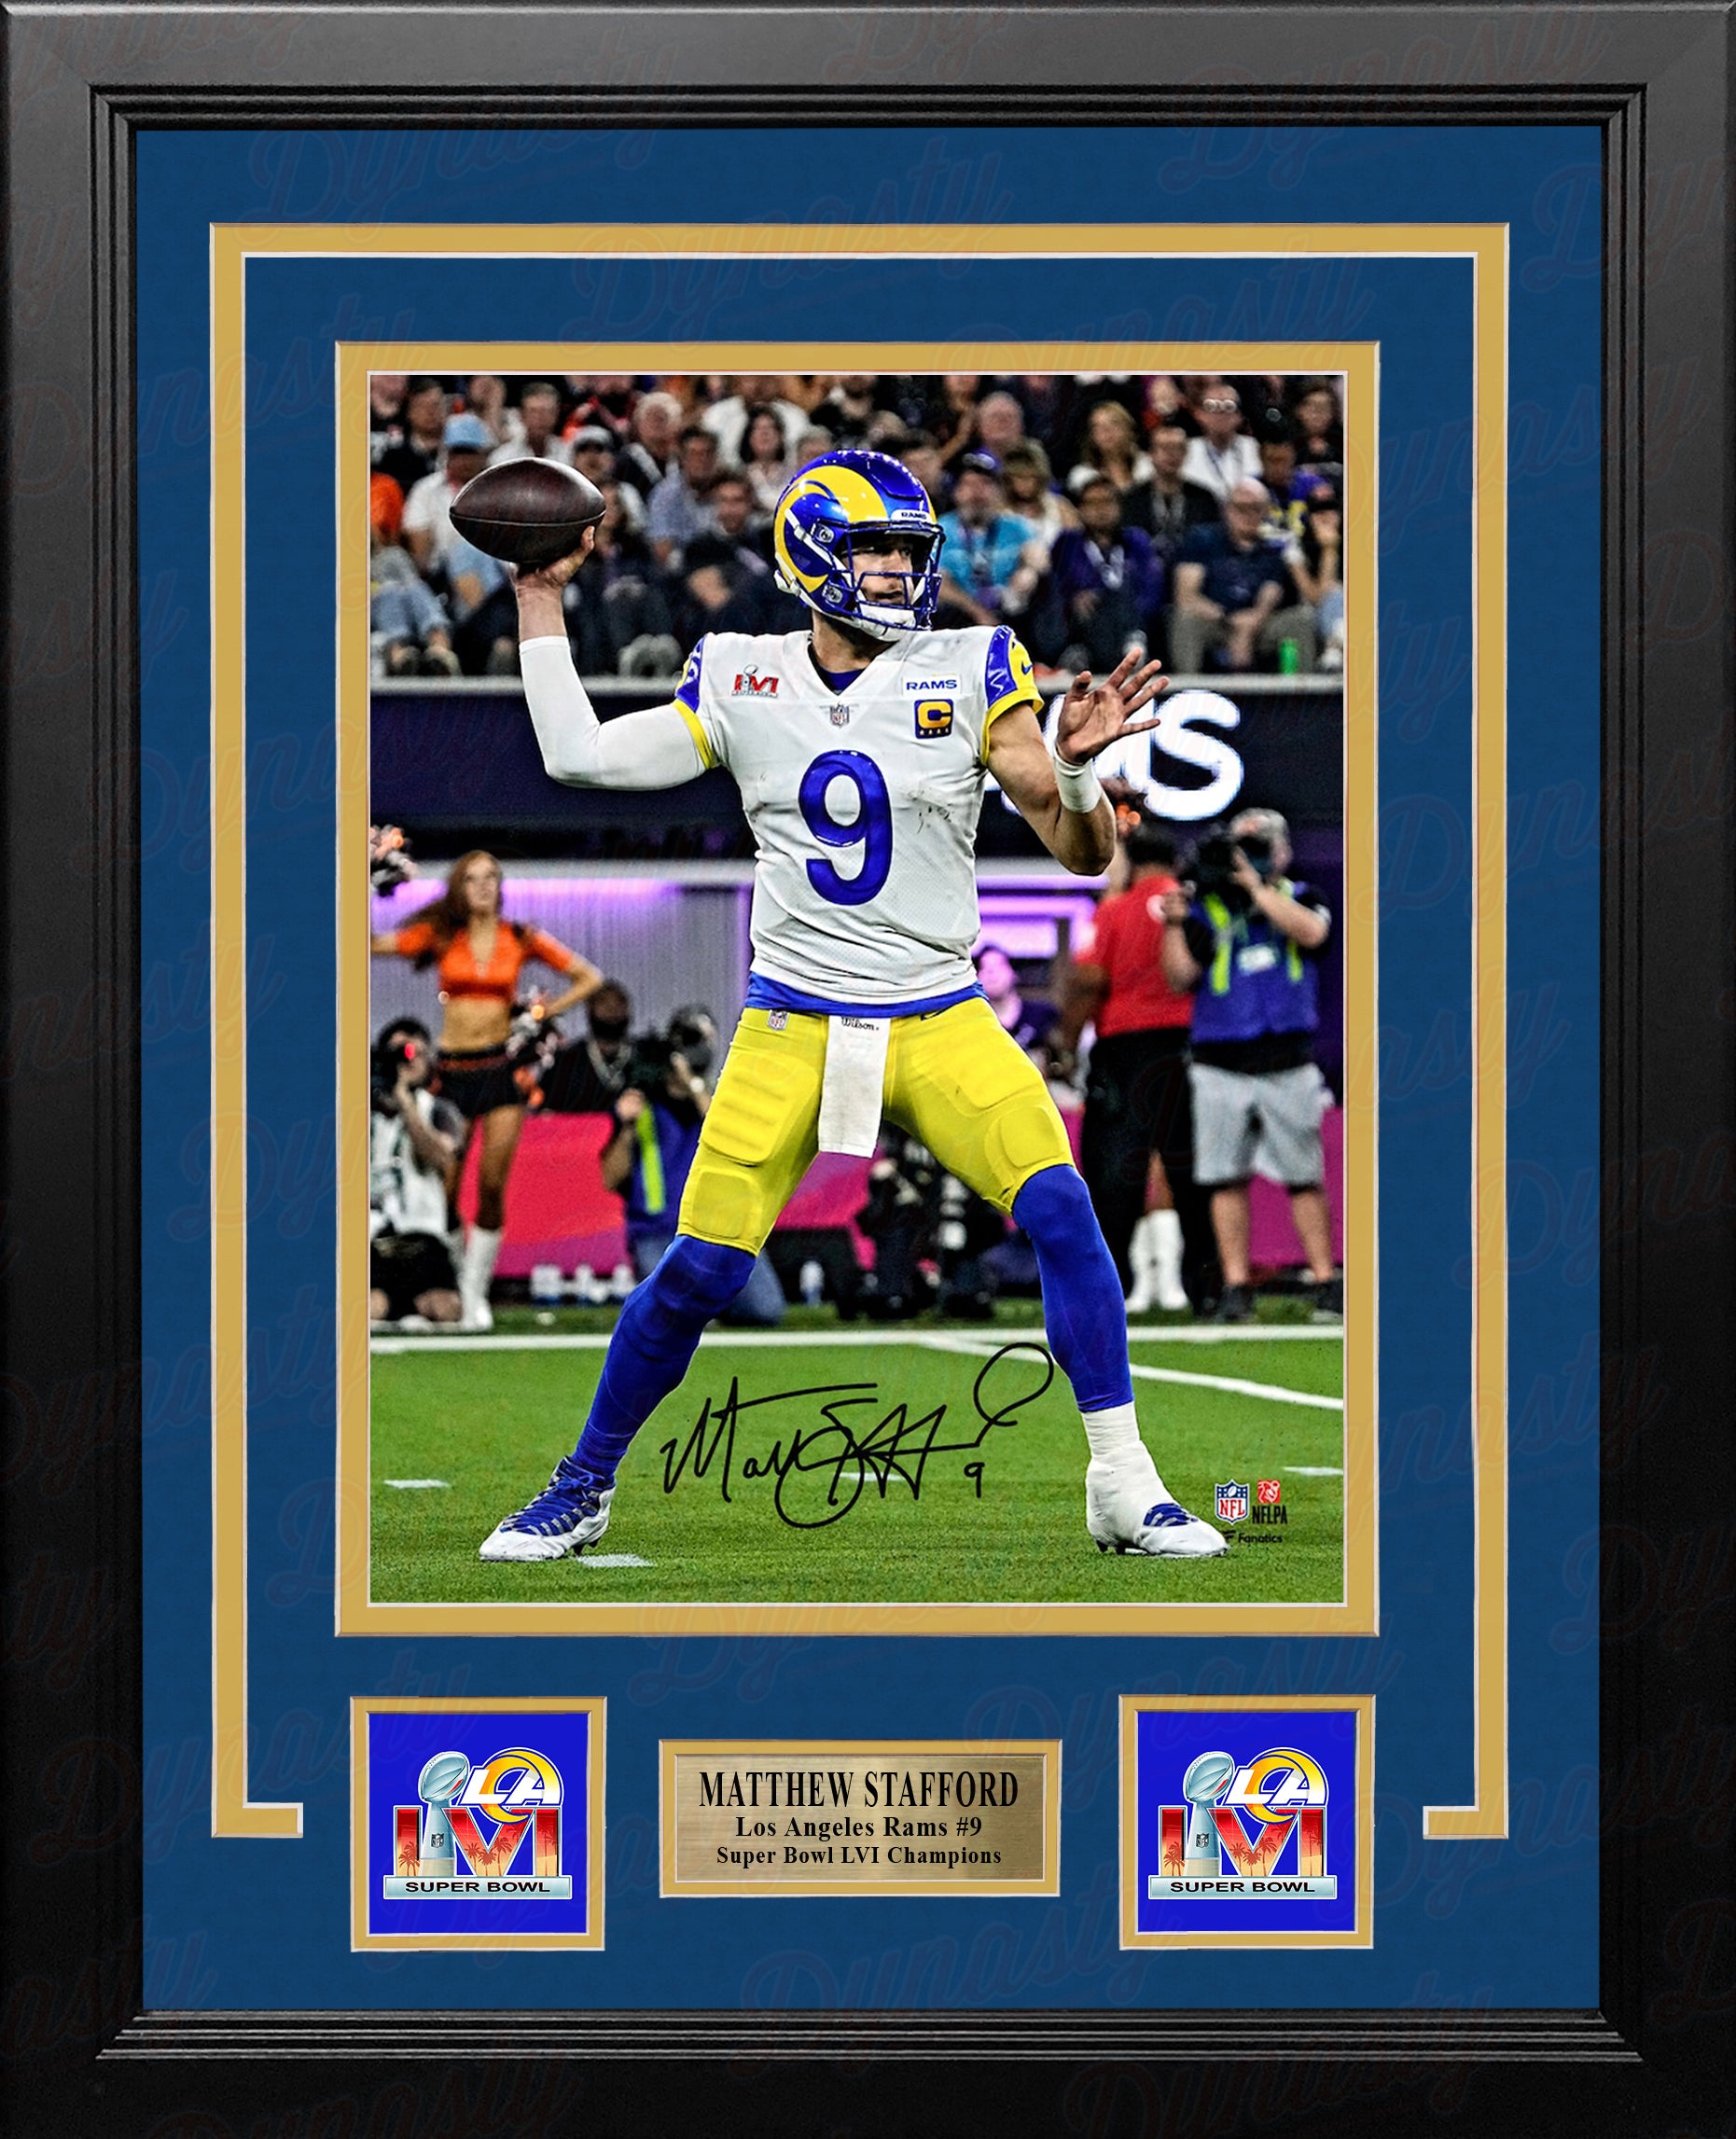 Matthew Stafford Super Bowl LVI Action Los Angeles Rams Autographed Framed Football Photo - Dynasty Sports & Framing 